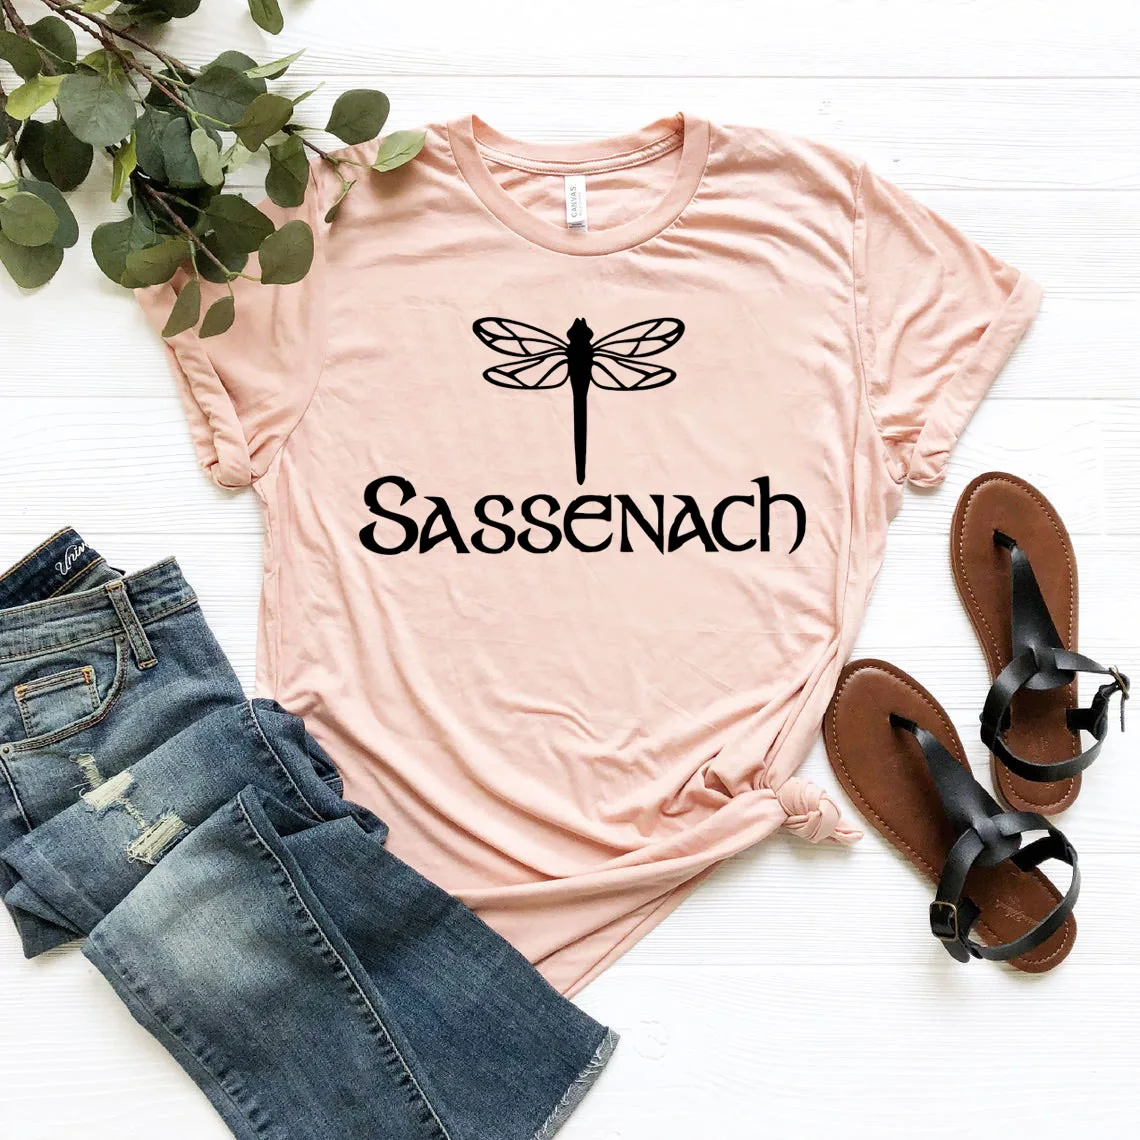 Sassenach Shirt Outlander Book Series T-Shirt Jamie Fraser Tee Tv Series Shirts Women Harajuku Graphic Tees Plus Size Tops